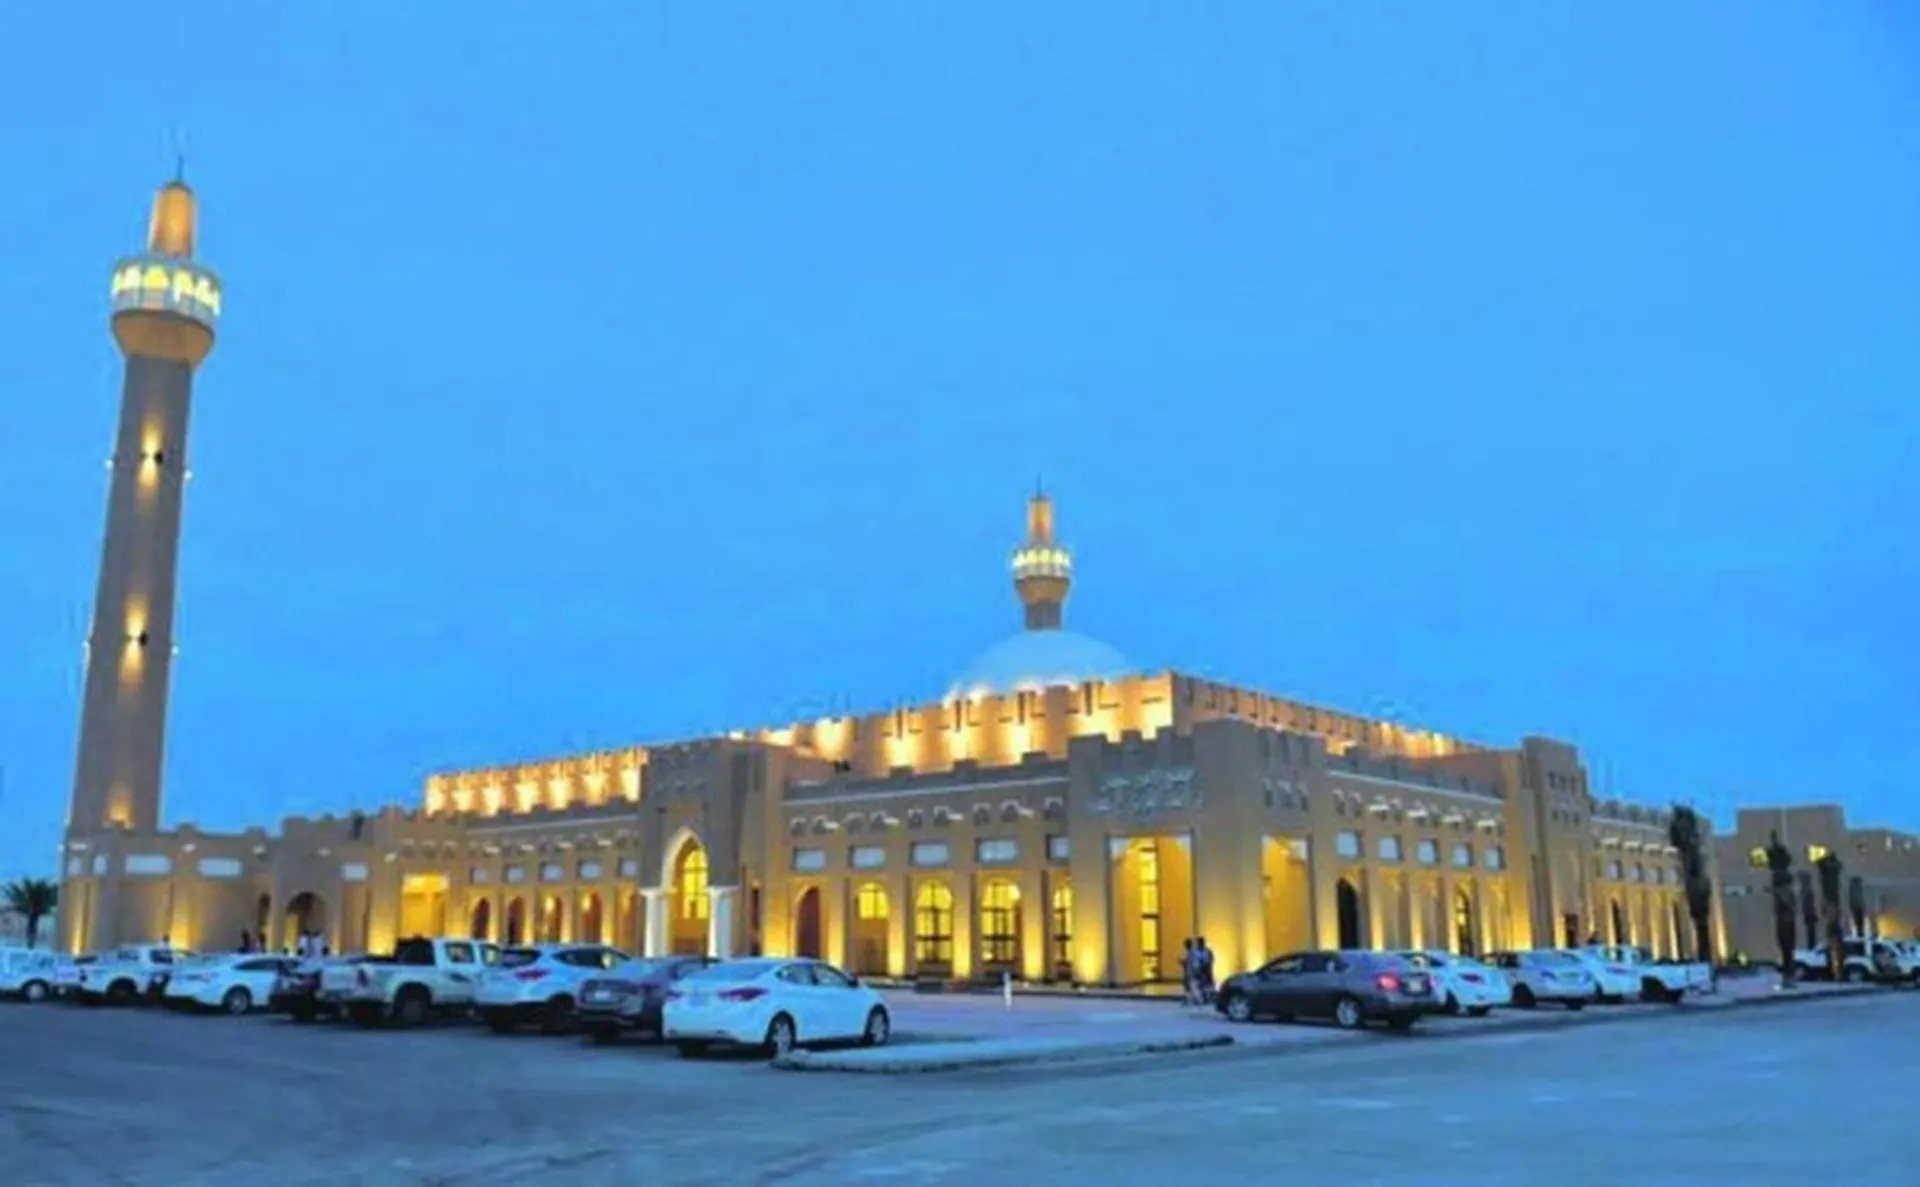 Prince Sultan bin Abdulaziz Mosque